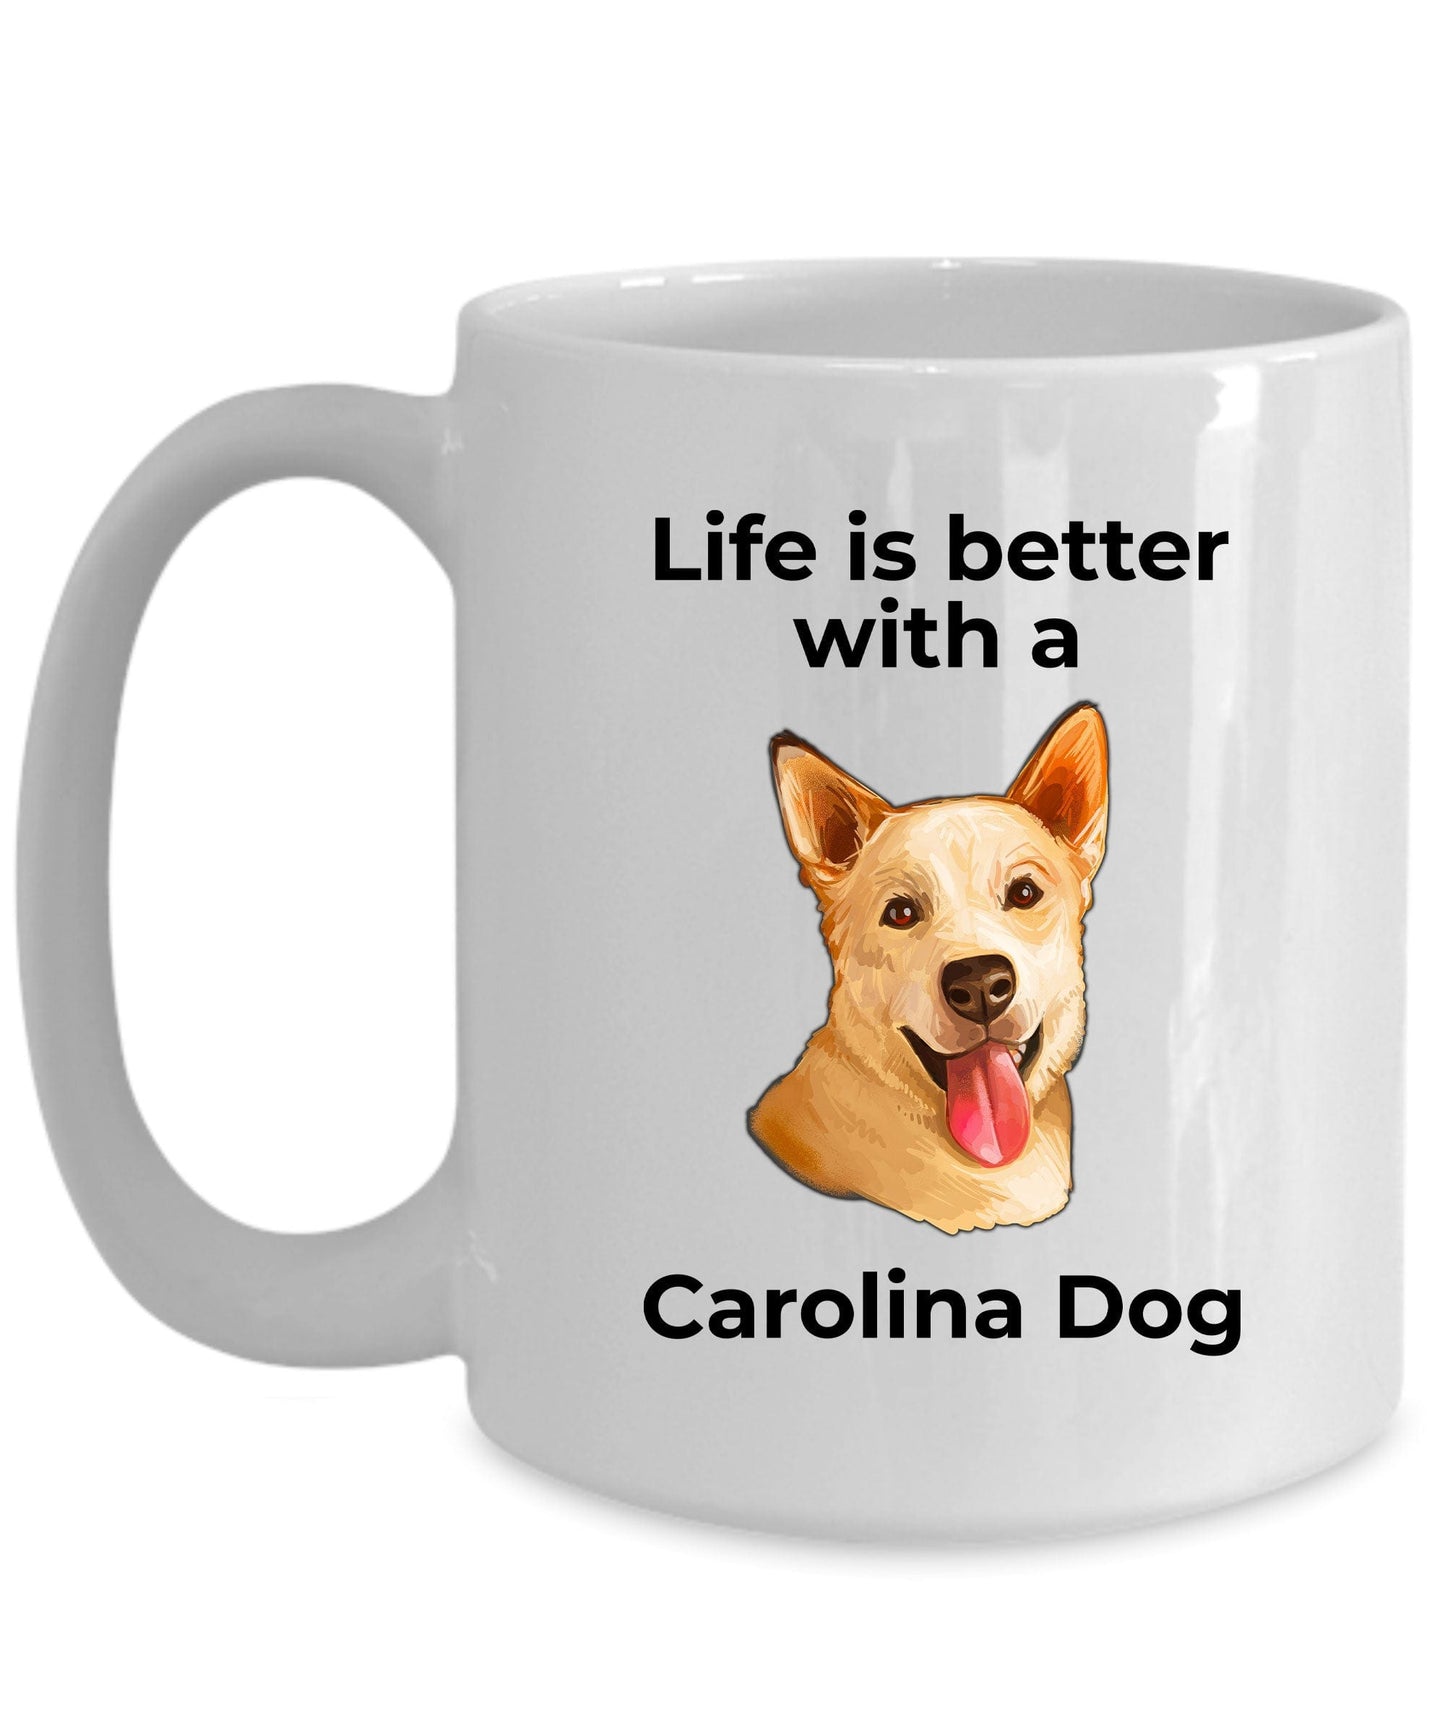 Carolina Yellow Dog Coffee Mug - Life is Better with a Carolina Dog